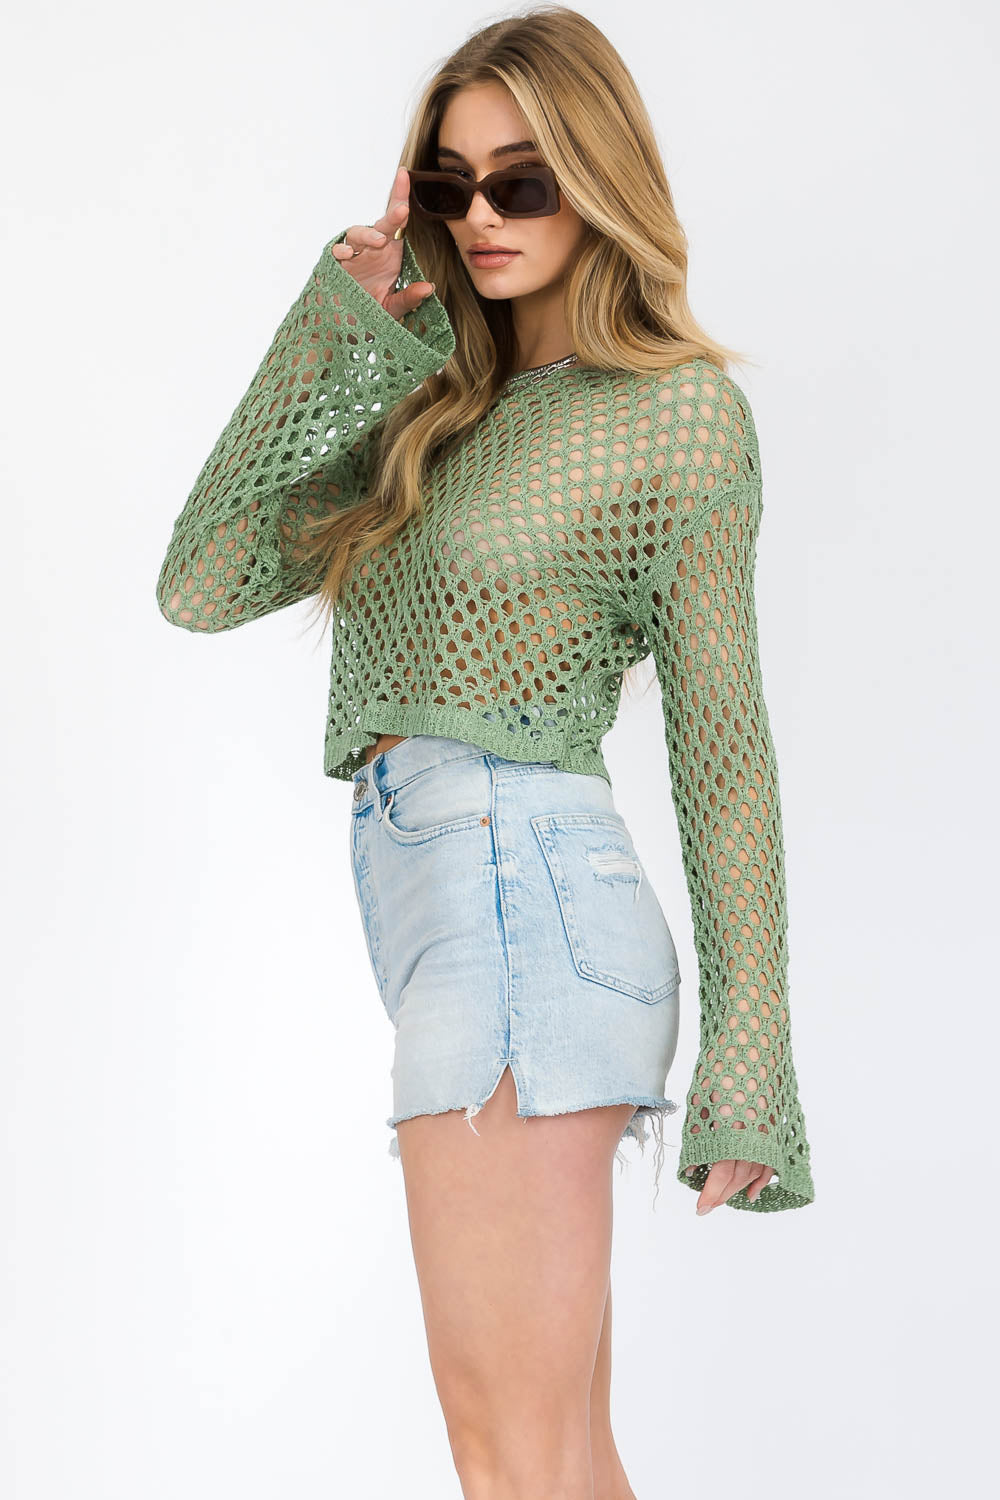 Layla Khaki Long Sleeve Crochet Crop Top